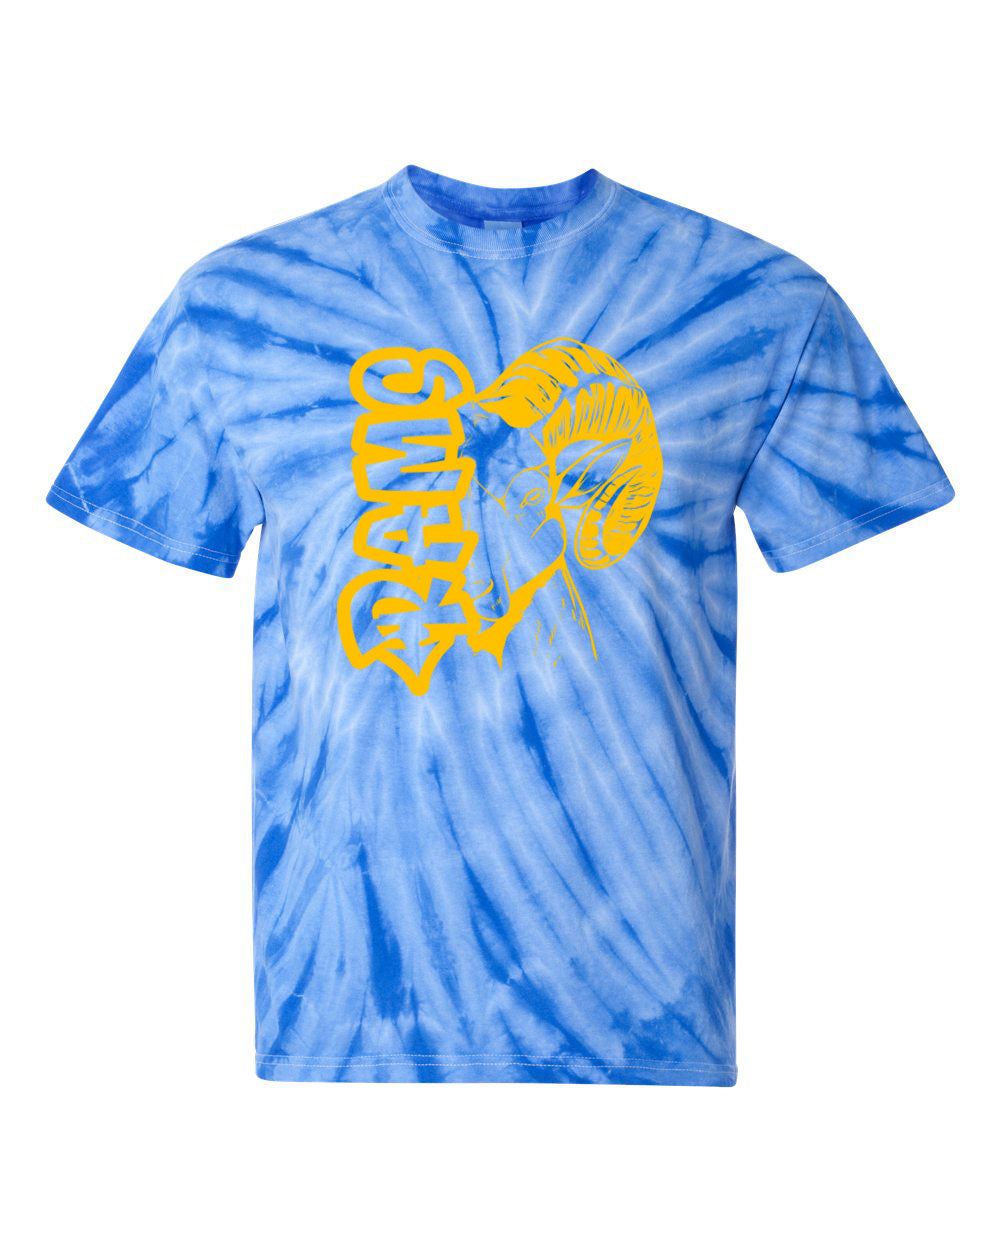 Sussex Middle School Tie Dye t-shirt Design 7